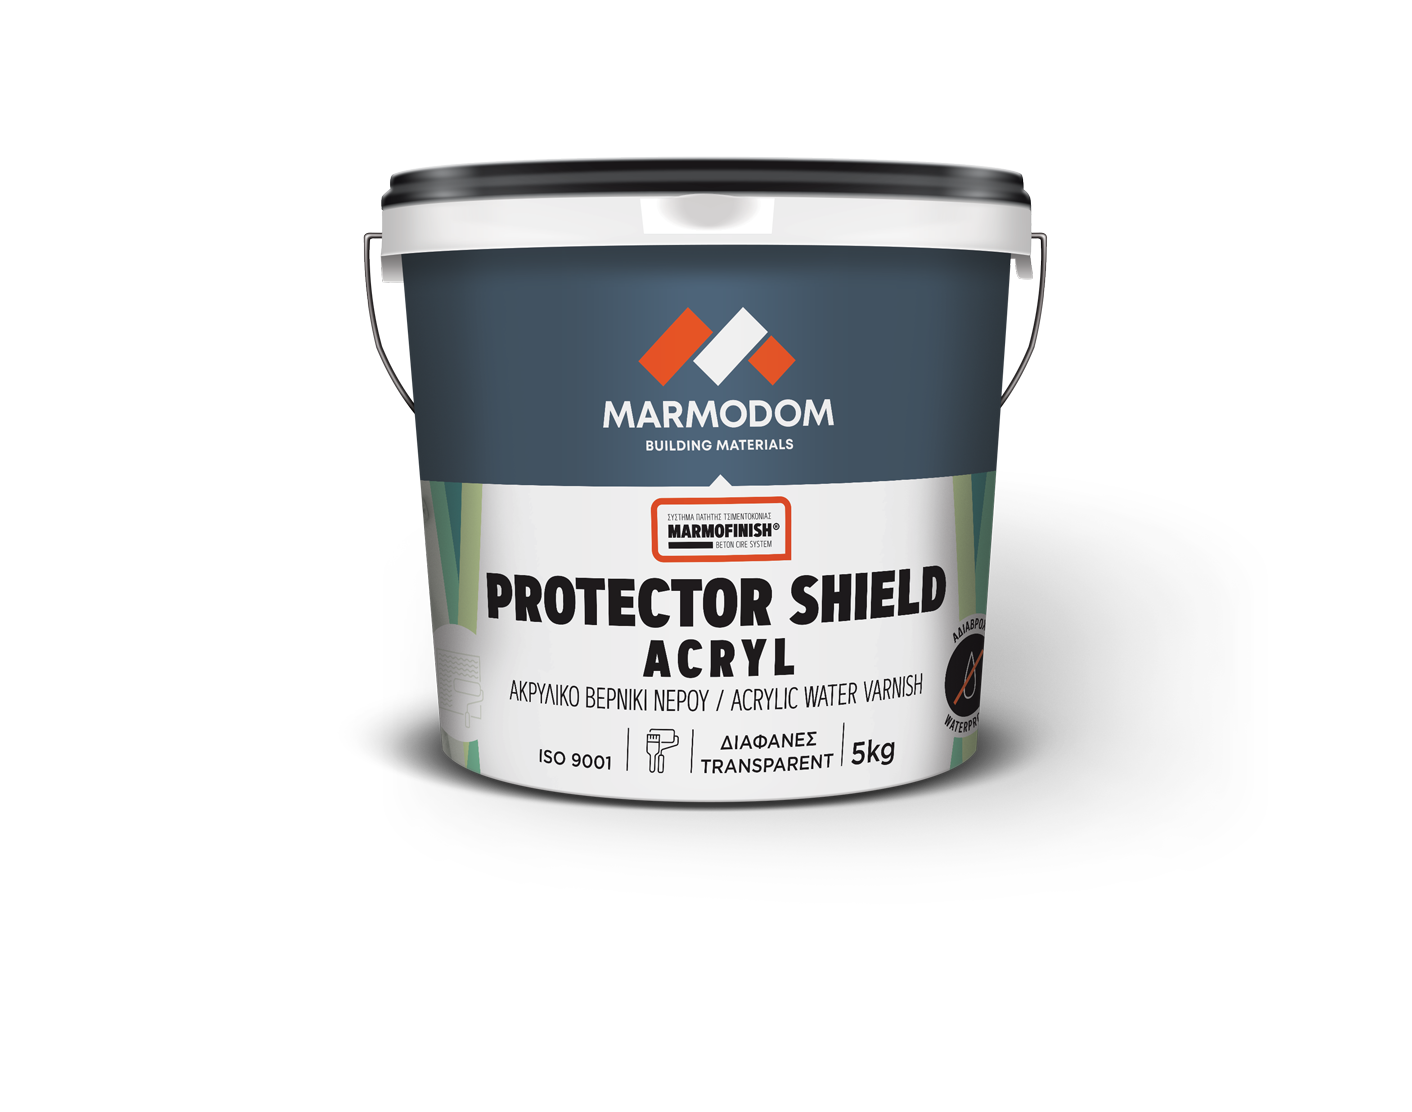 Marmodom PROTECTOR SHIELD ACRYL 5kg Protective acrylic water varnish